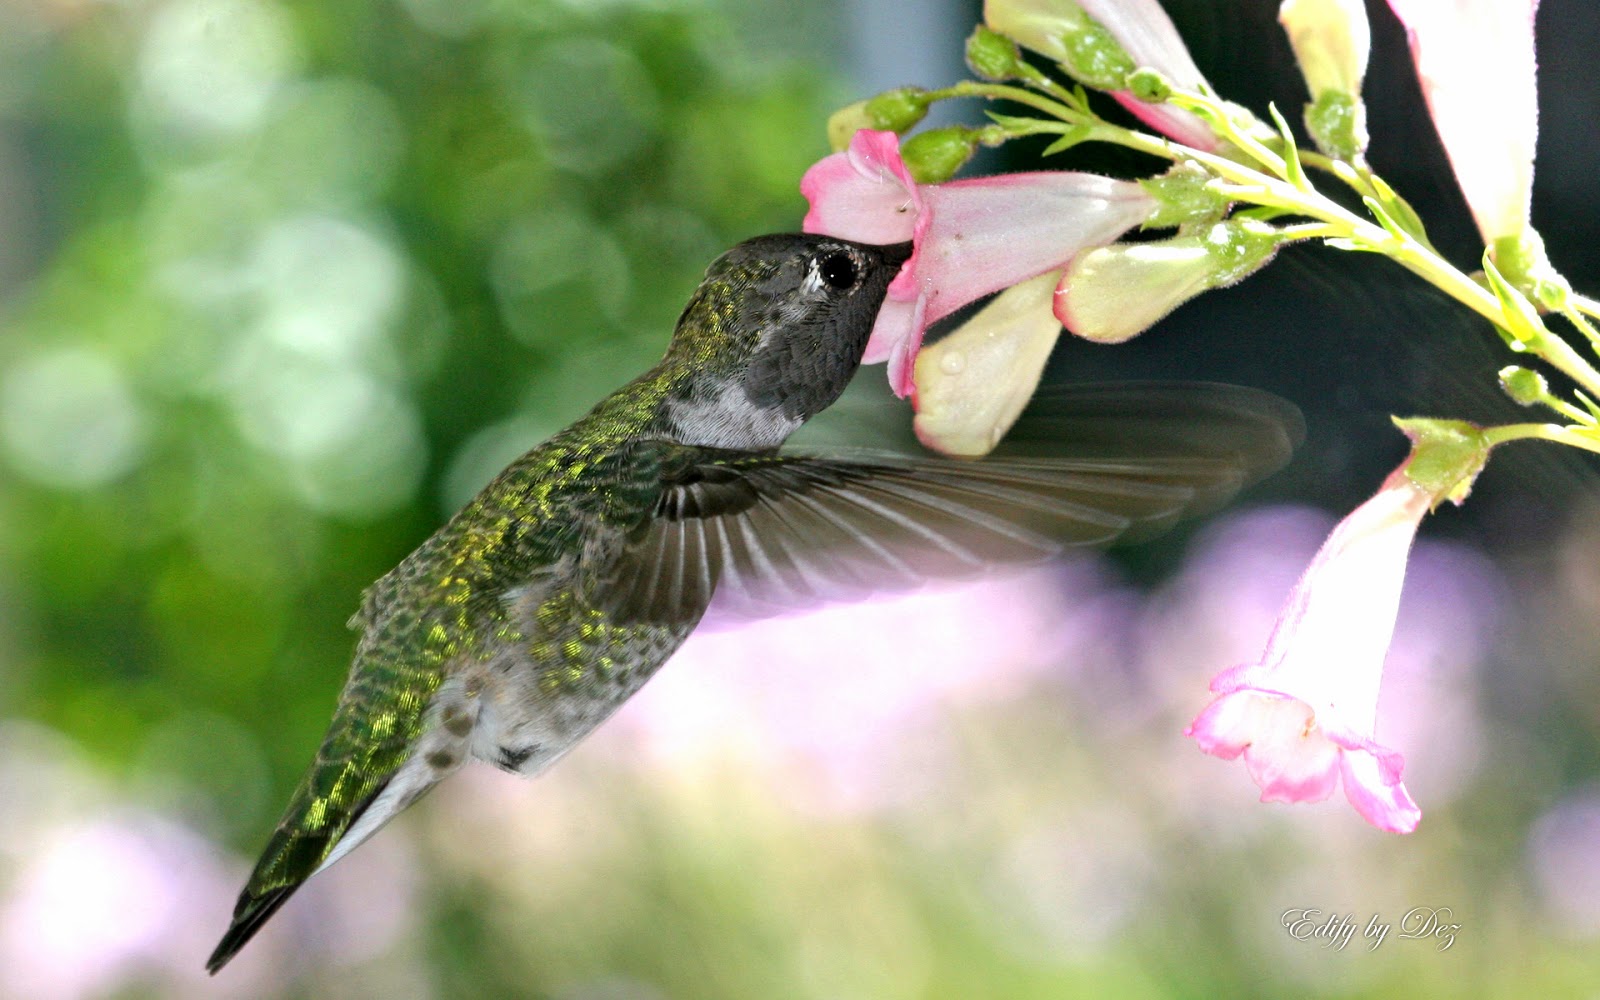 http://beautifulwallpapersfordesktop.blogspot.com/2014/01/hummingbird-wallpapers-hd.html